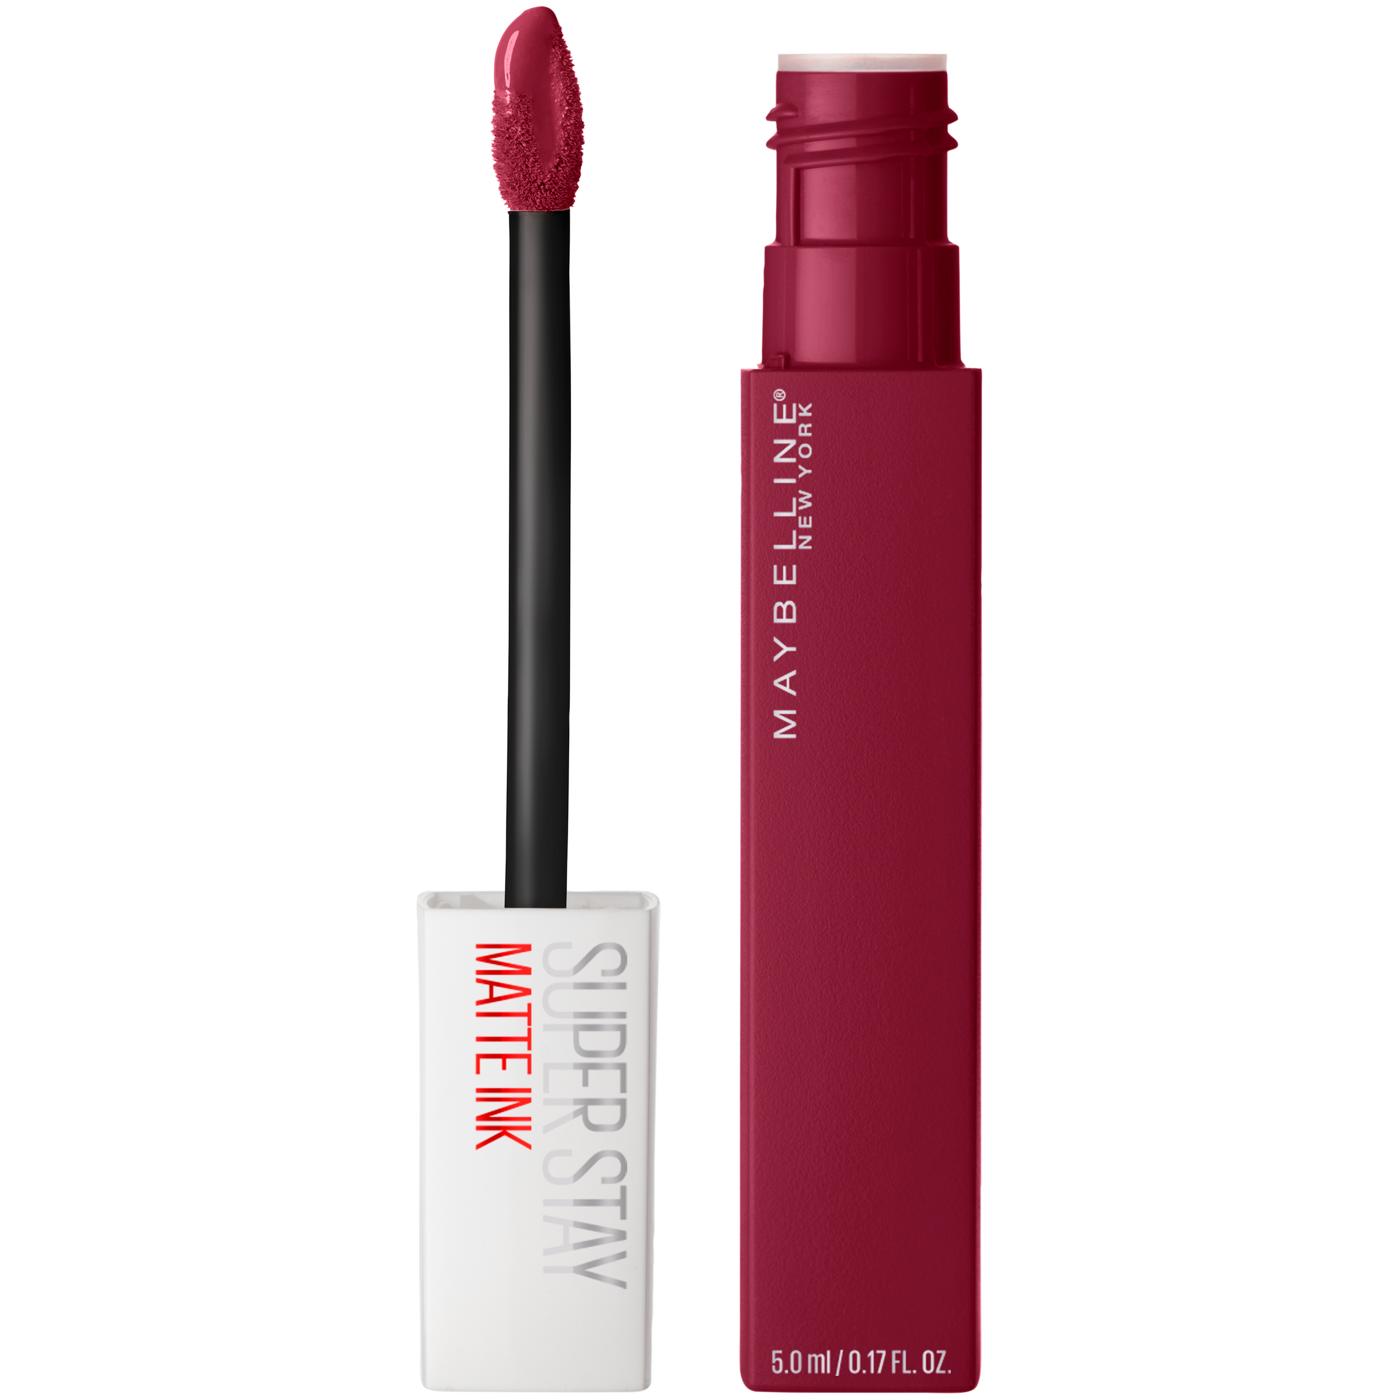 Maybelline Super Stay Matte Ink Liquid Lipstick - Founder; image 1 of 5